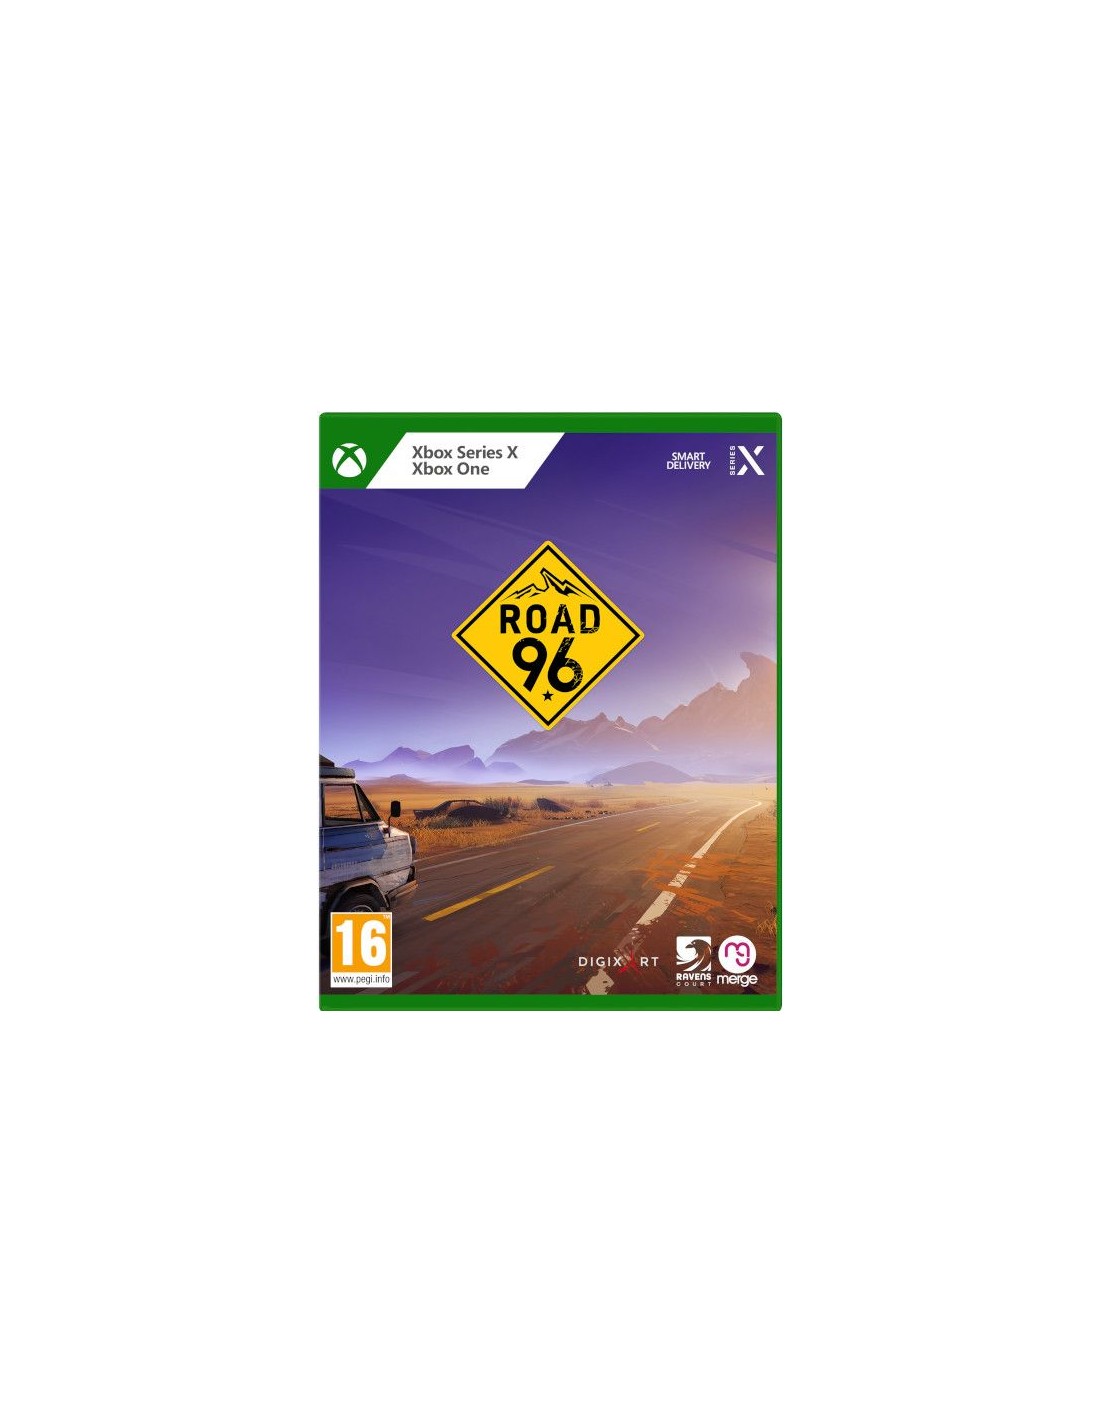 Error curva Presentar Road 96 (Xbox Series X / Xbox One) 